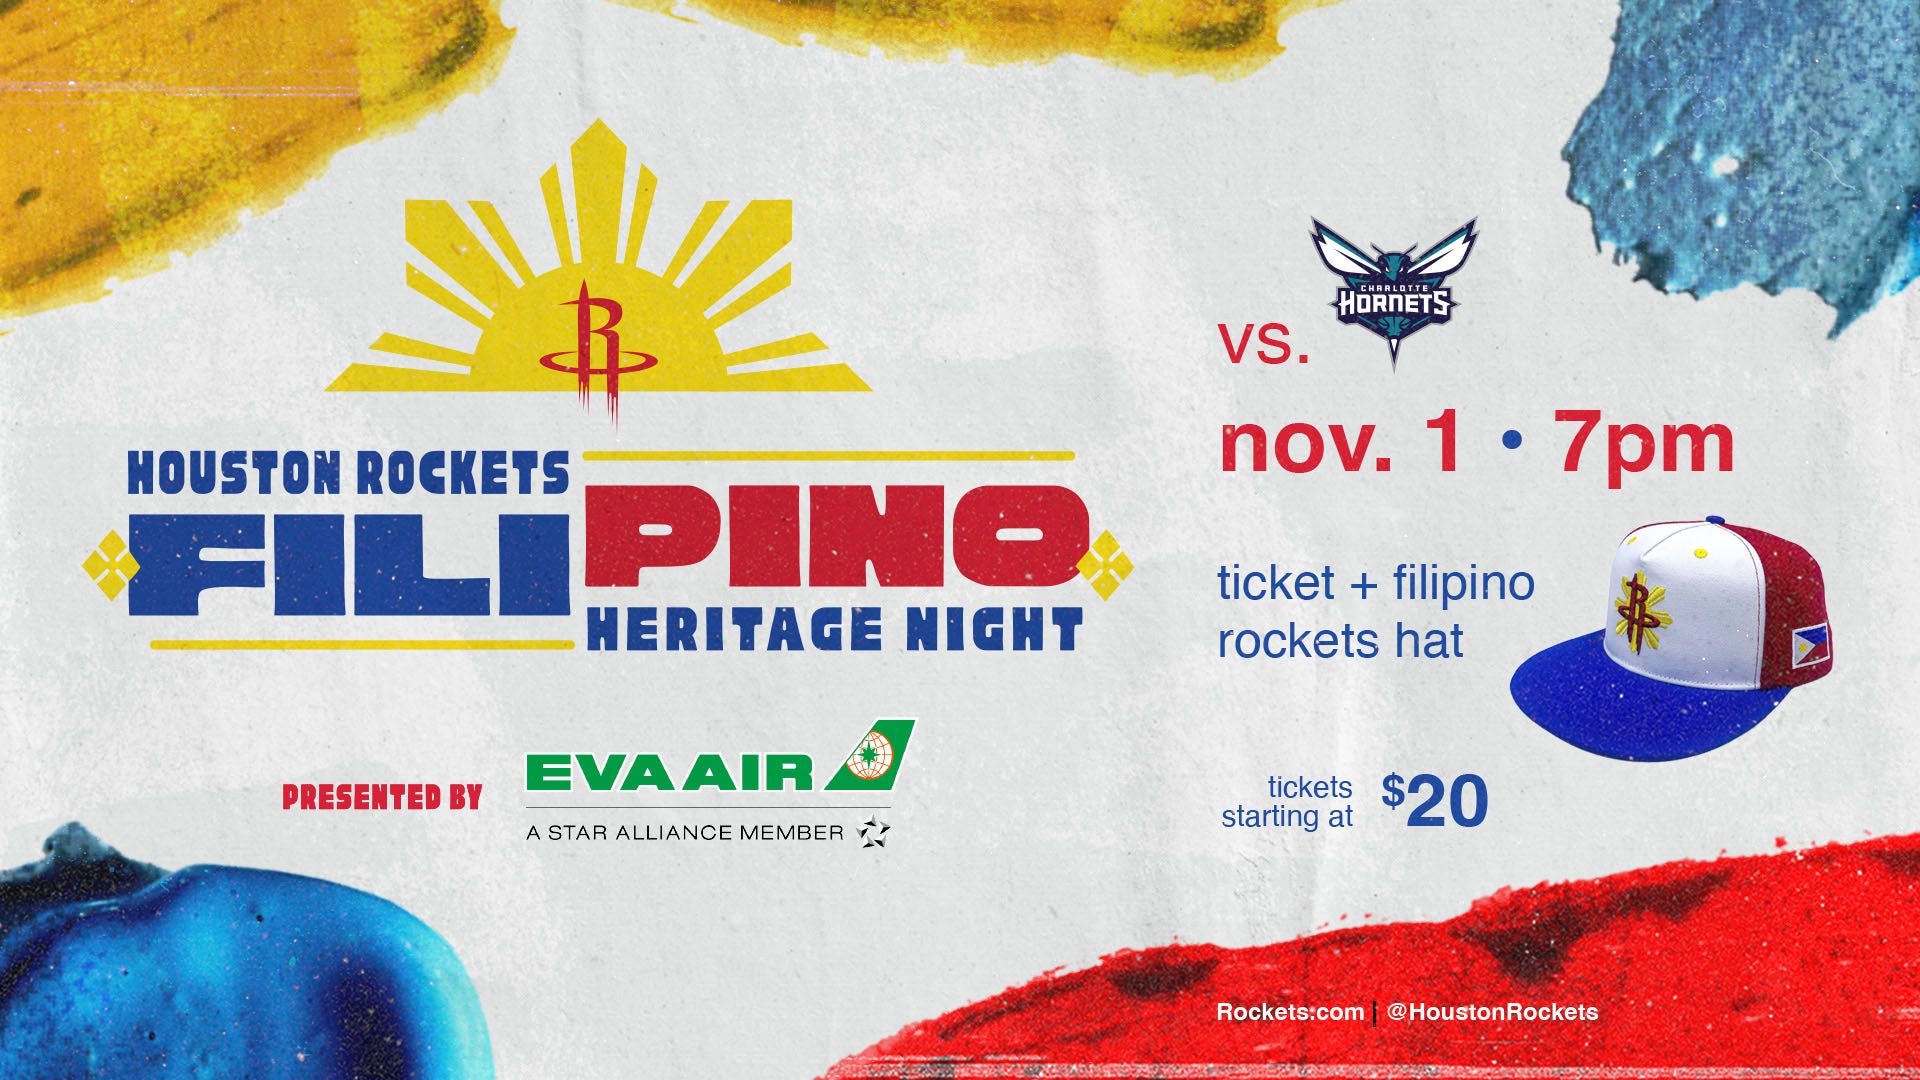 Tonight is Filipino Heritage Night - Golden State Warriors